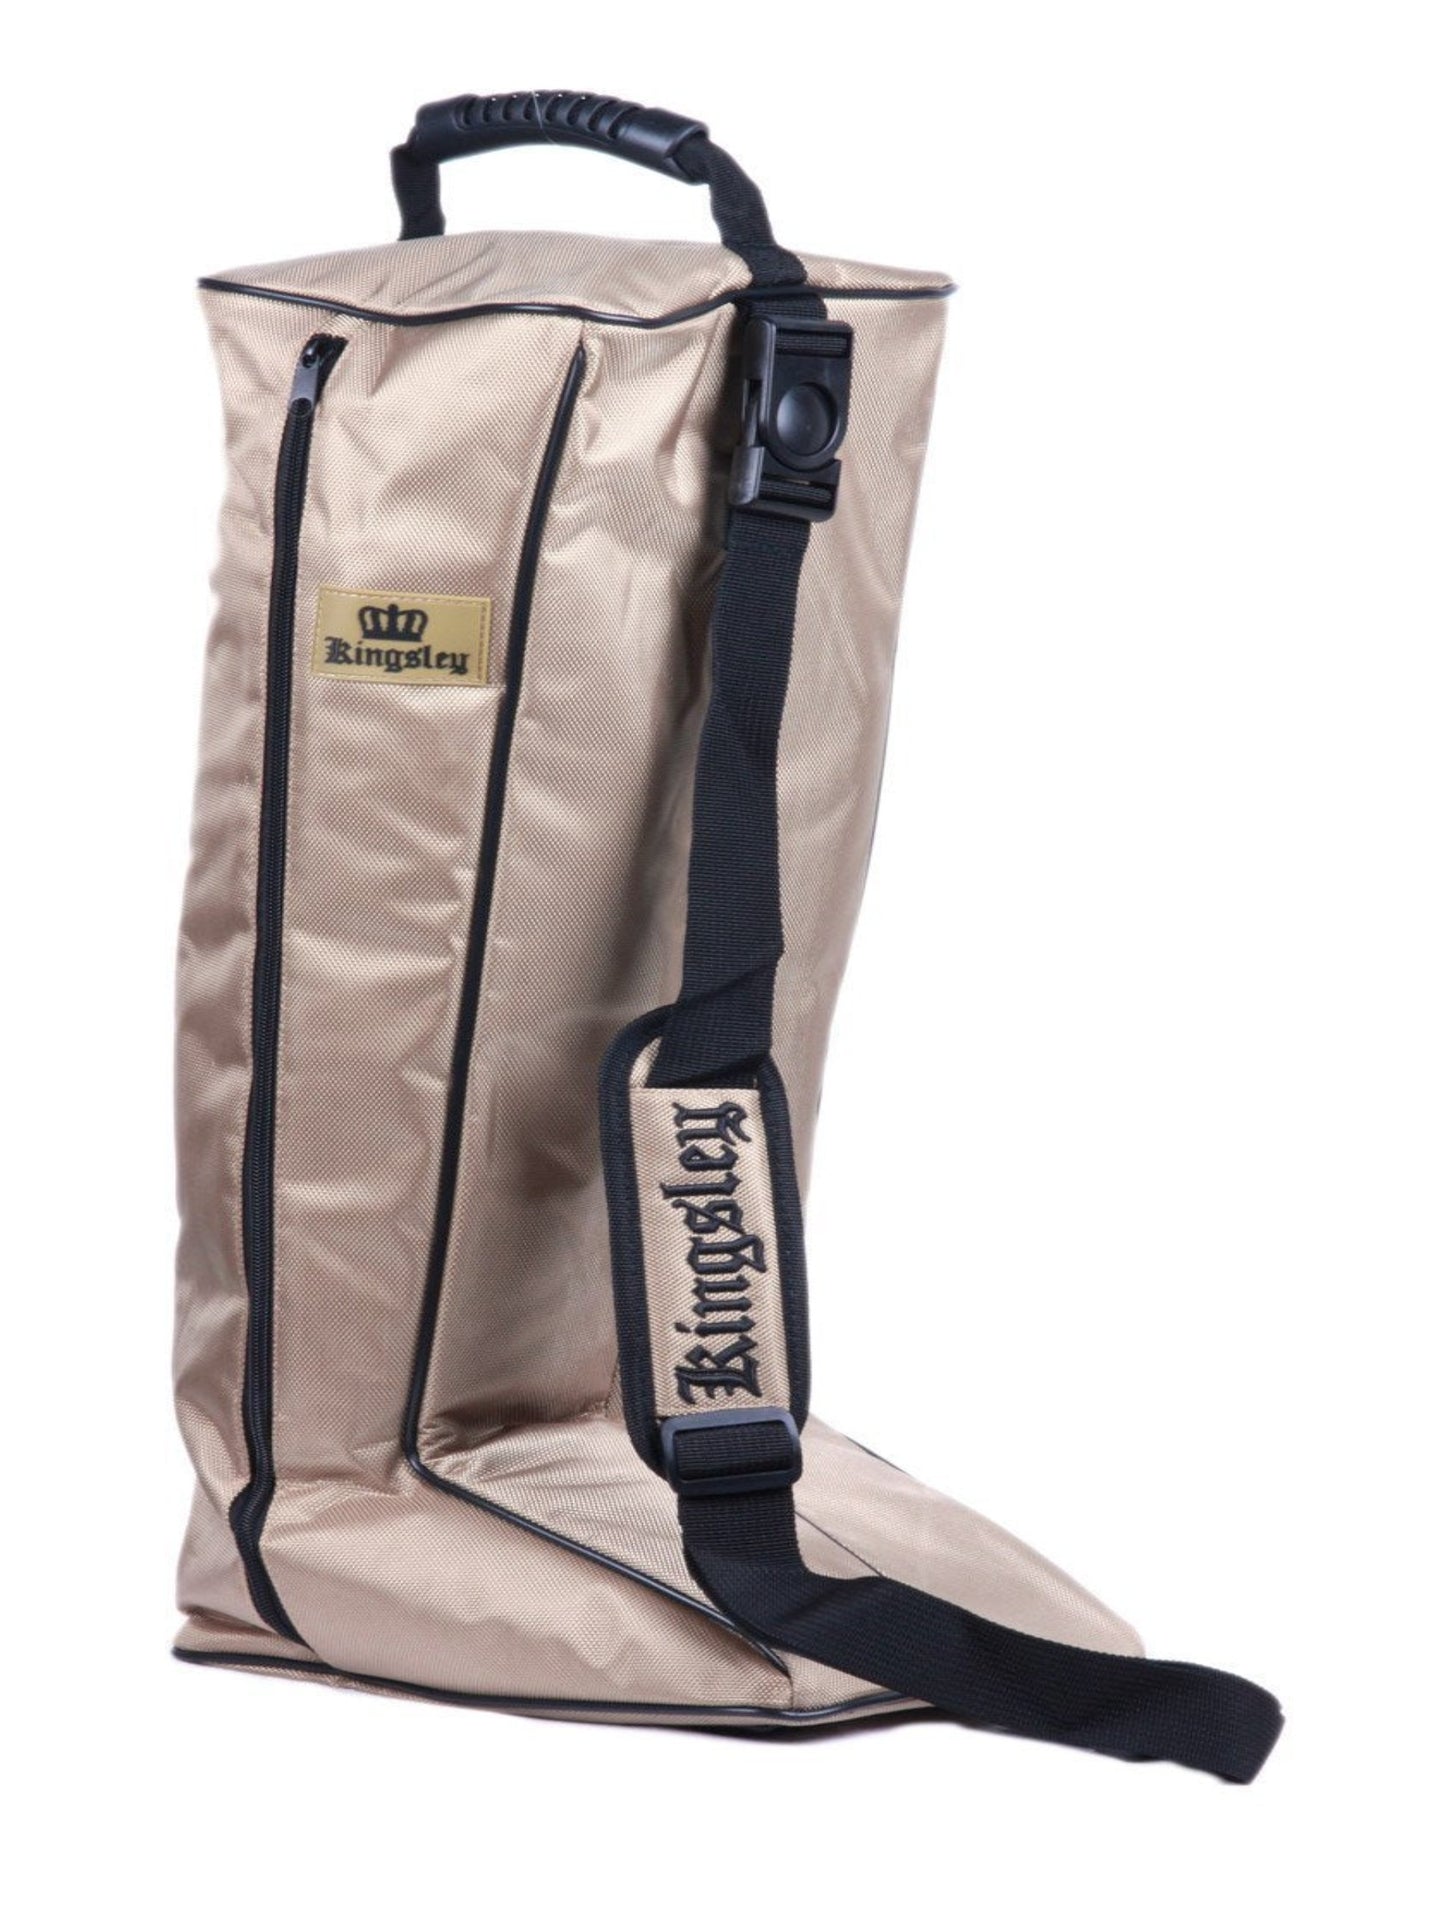 Kingsley Boot Bag